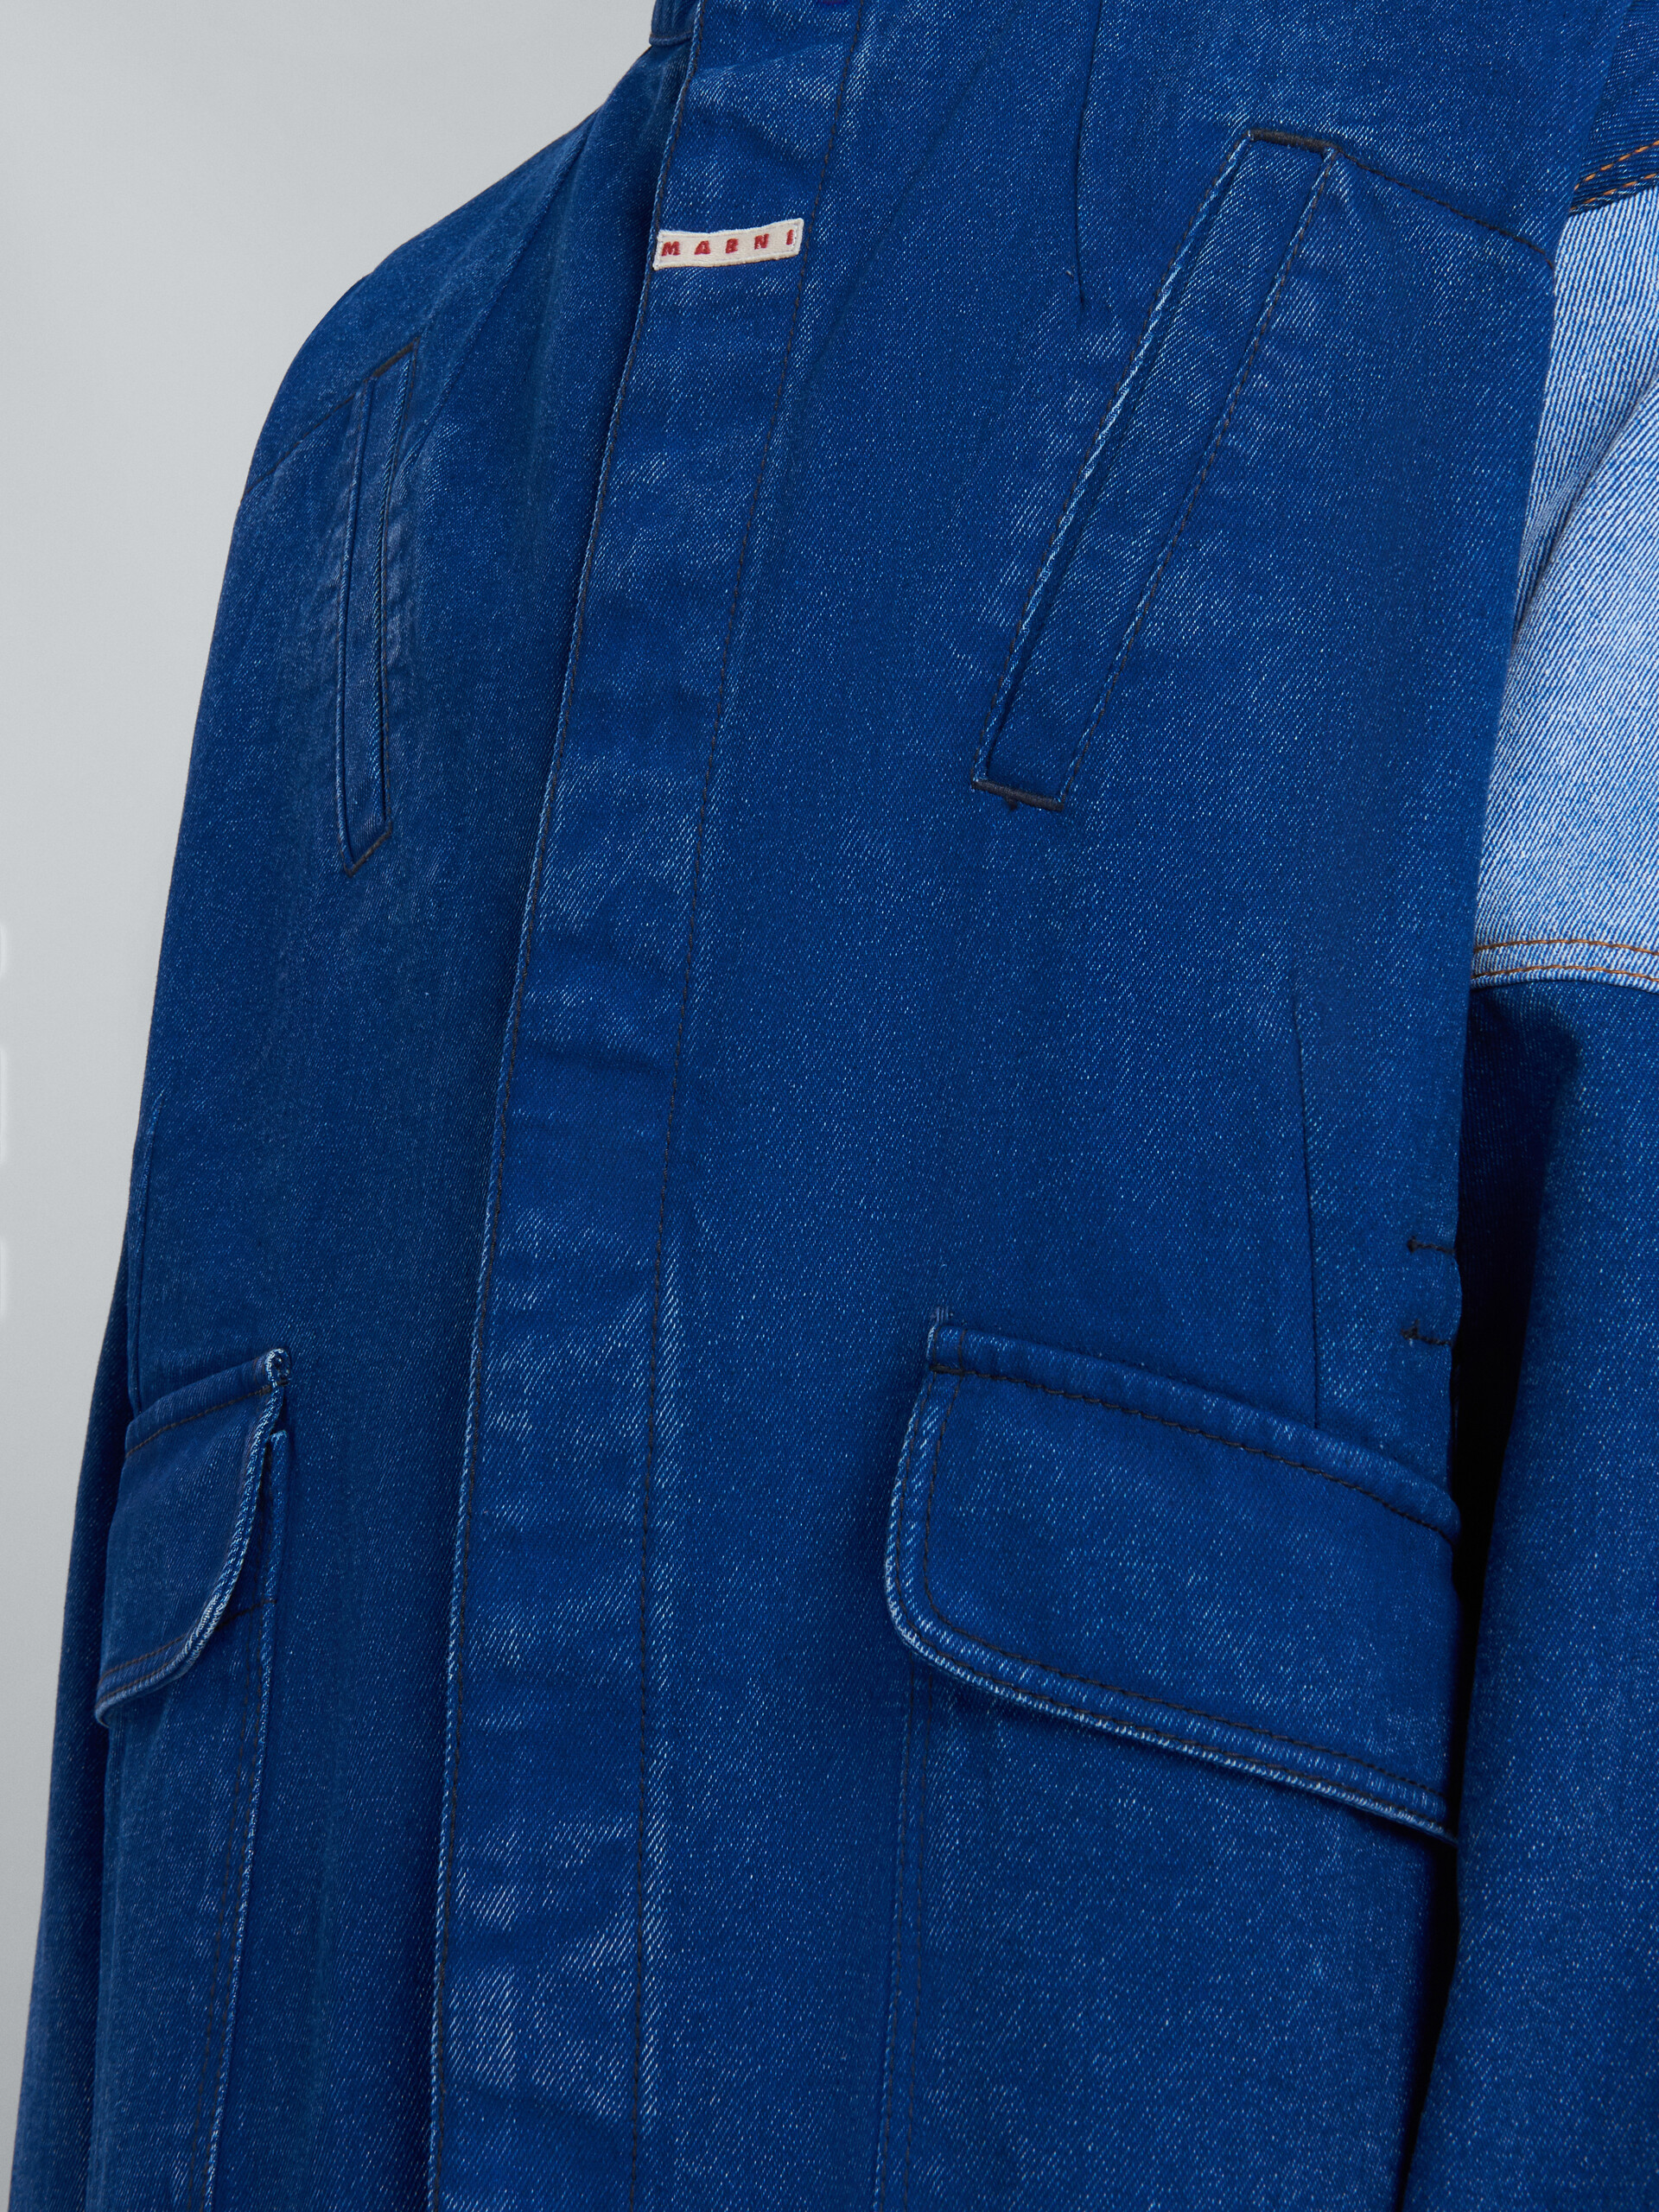 Beschichtete, blaue Jeansjacke - Jacken - Image 5